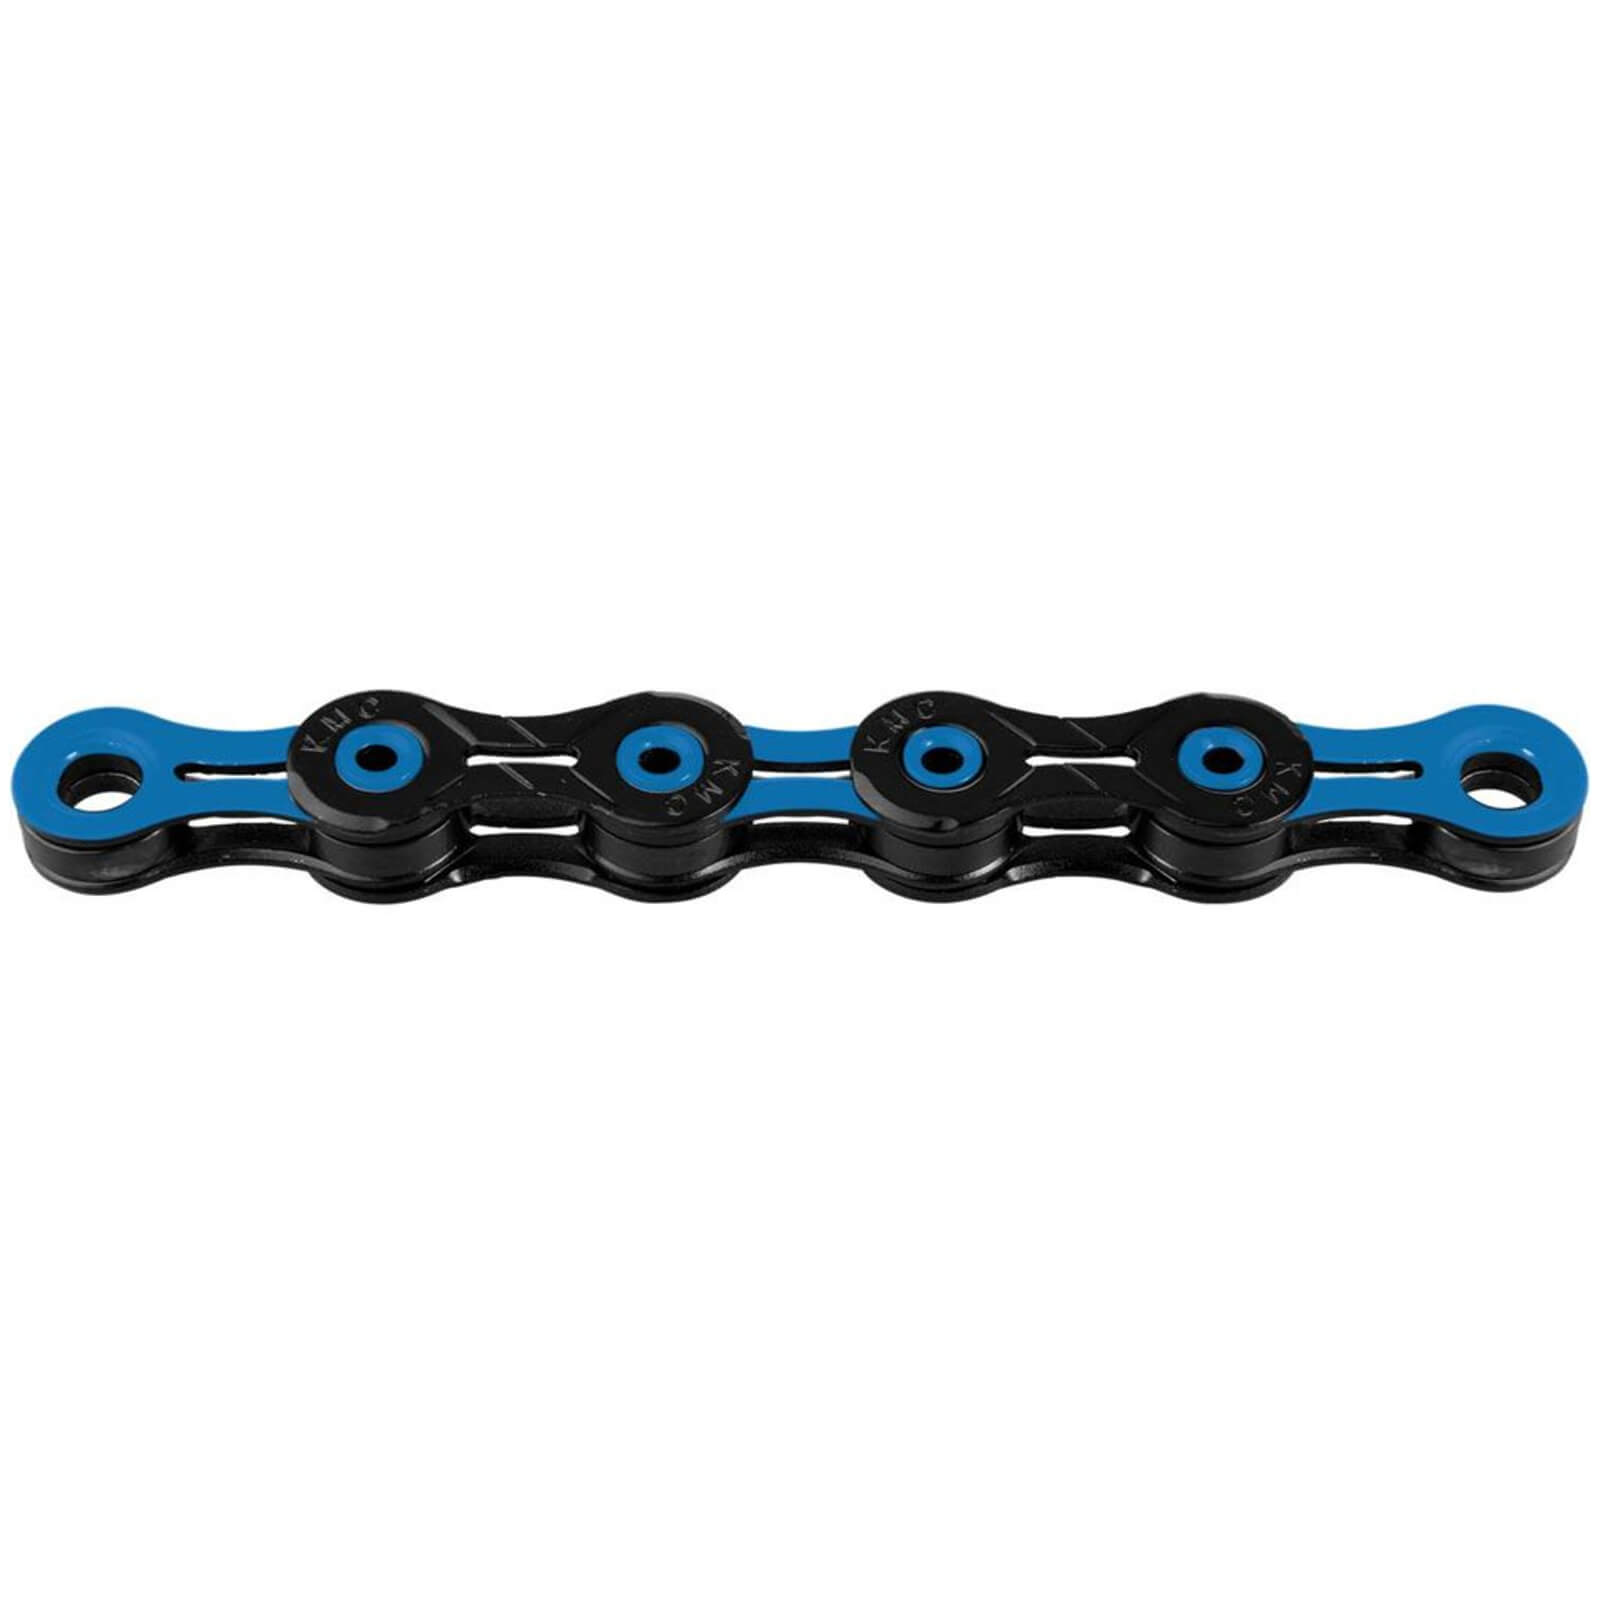 KMC DLC 11 Speed Chain - 116 Links - Black/Blue